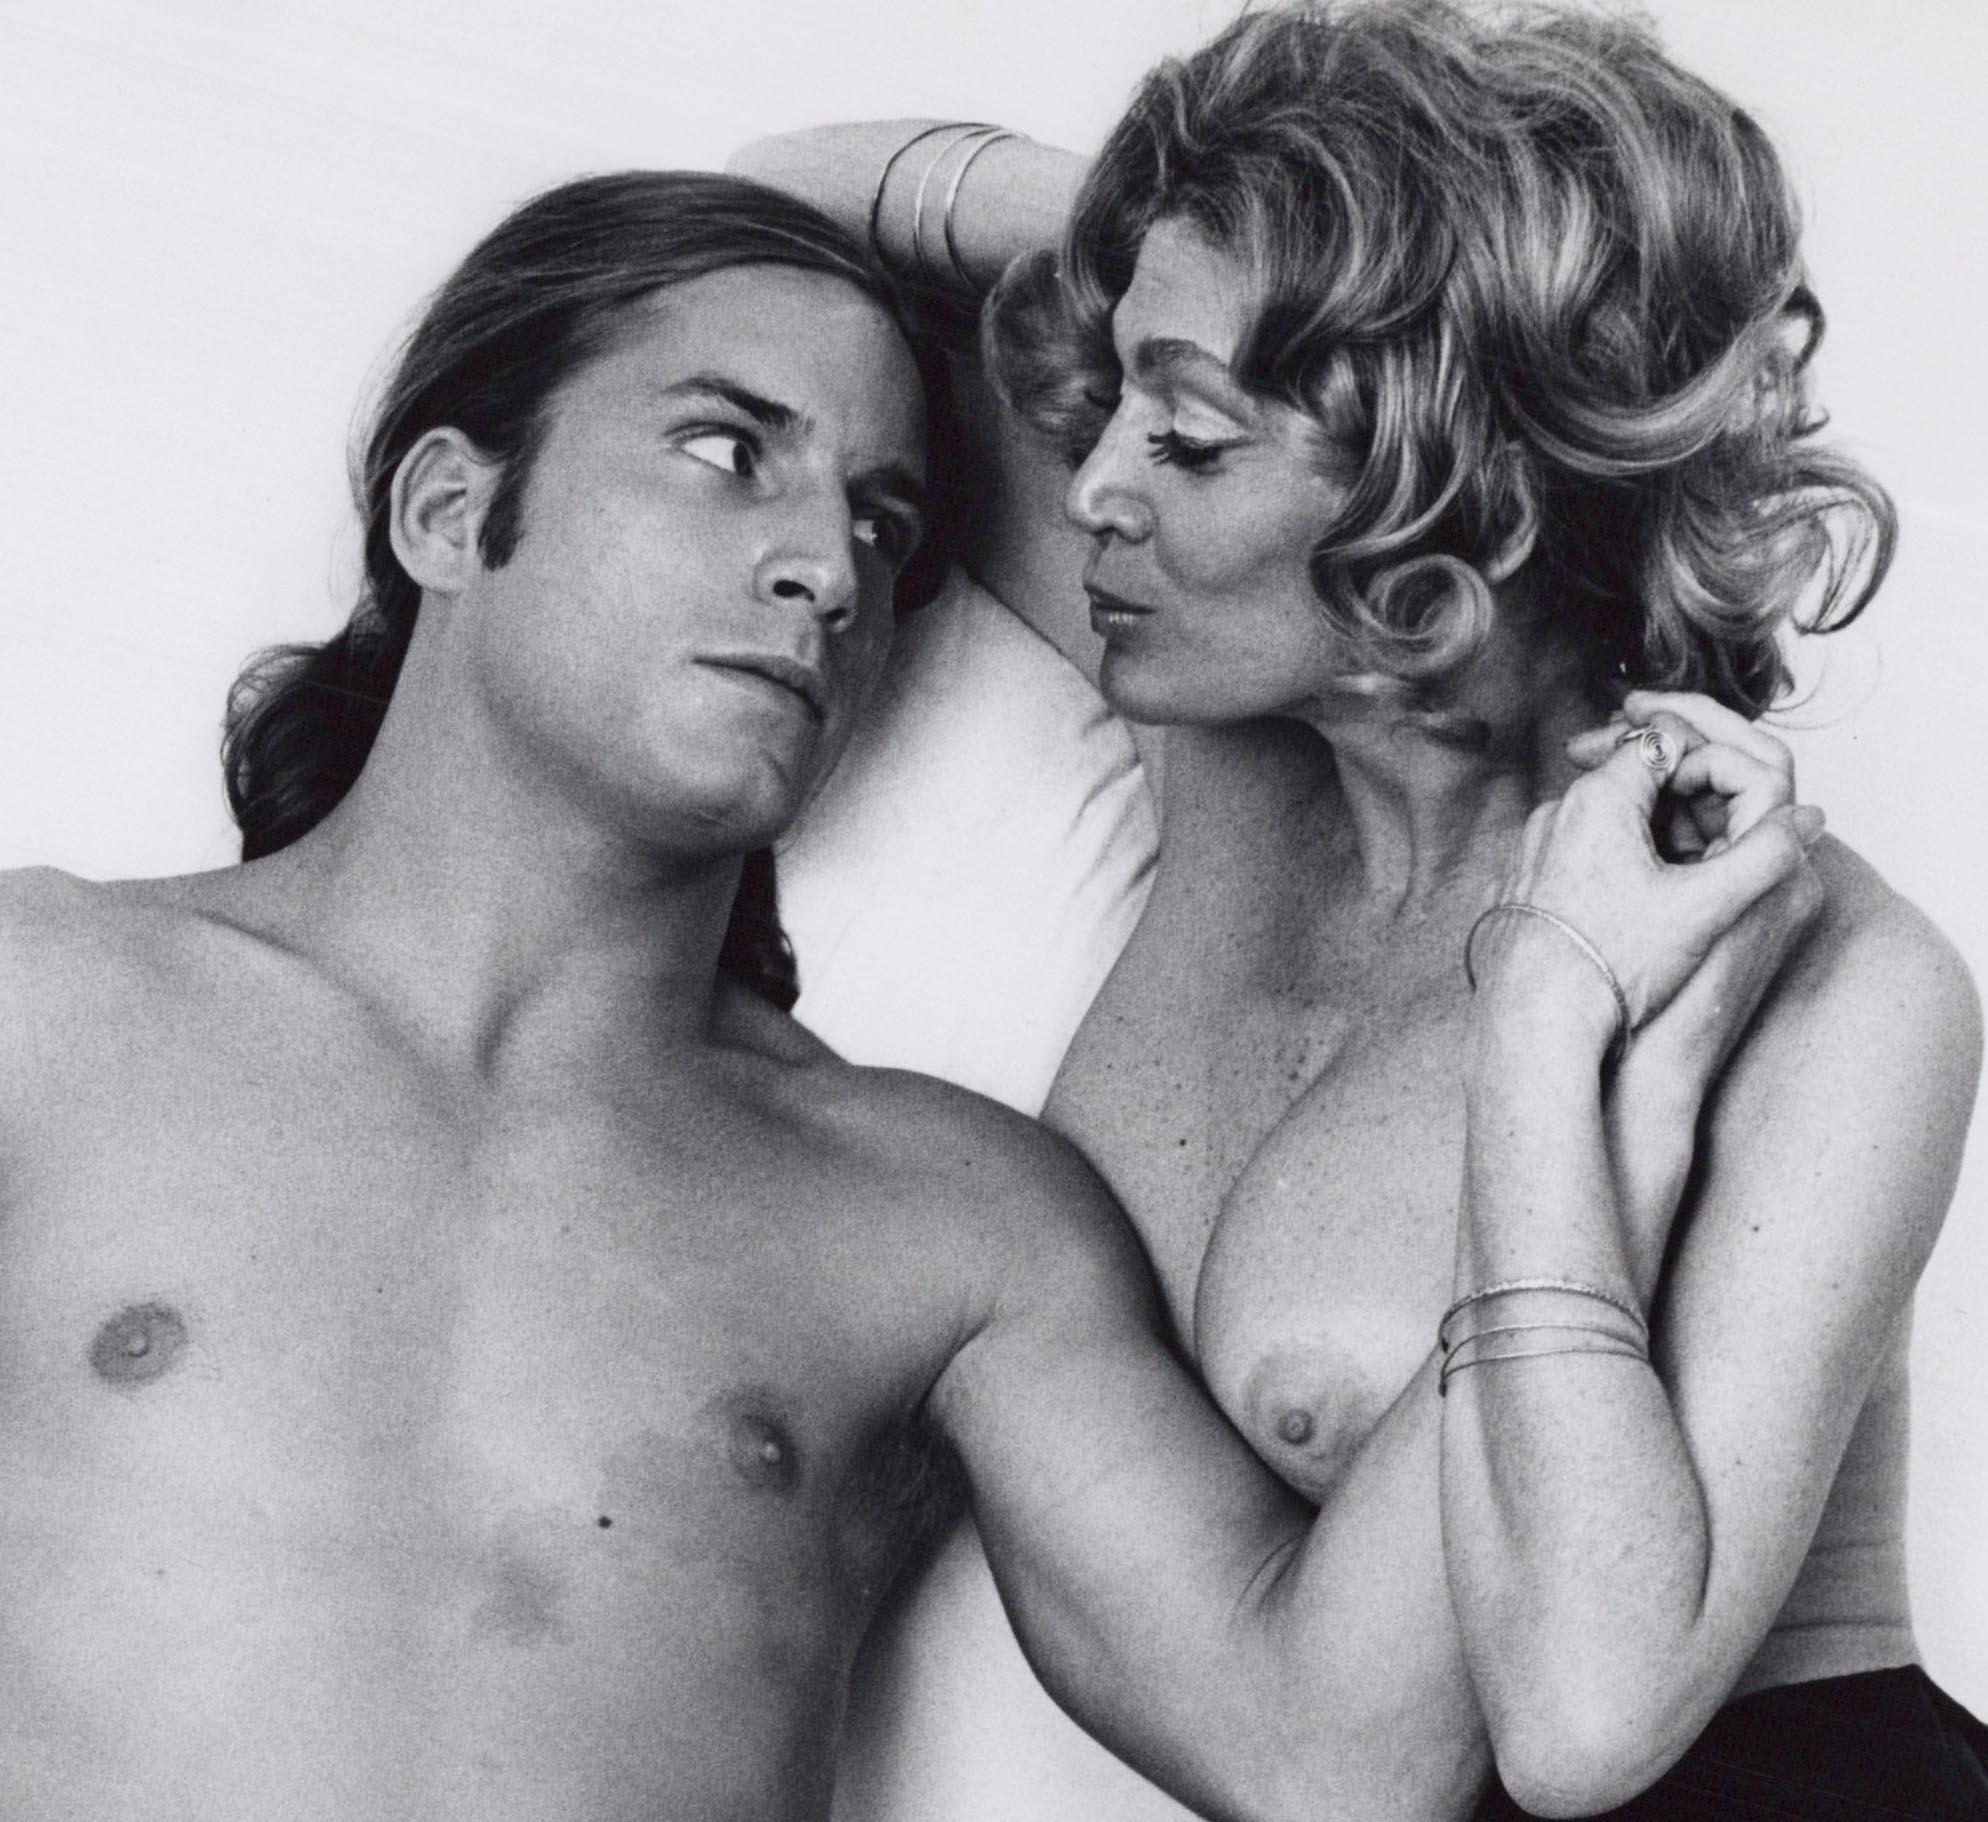 Andy Warhol - Les superstars de Joe Dallesandro et Sylvia Miles dans « Heat » - Photograph de Jack Mitchell